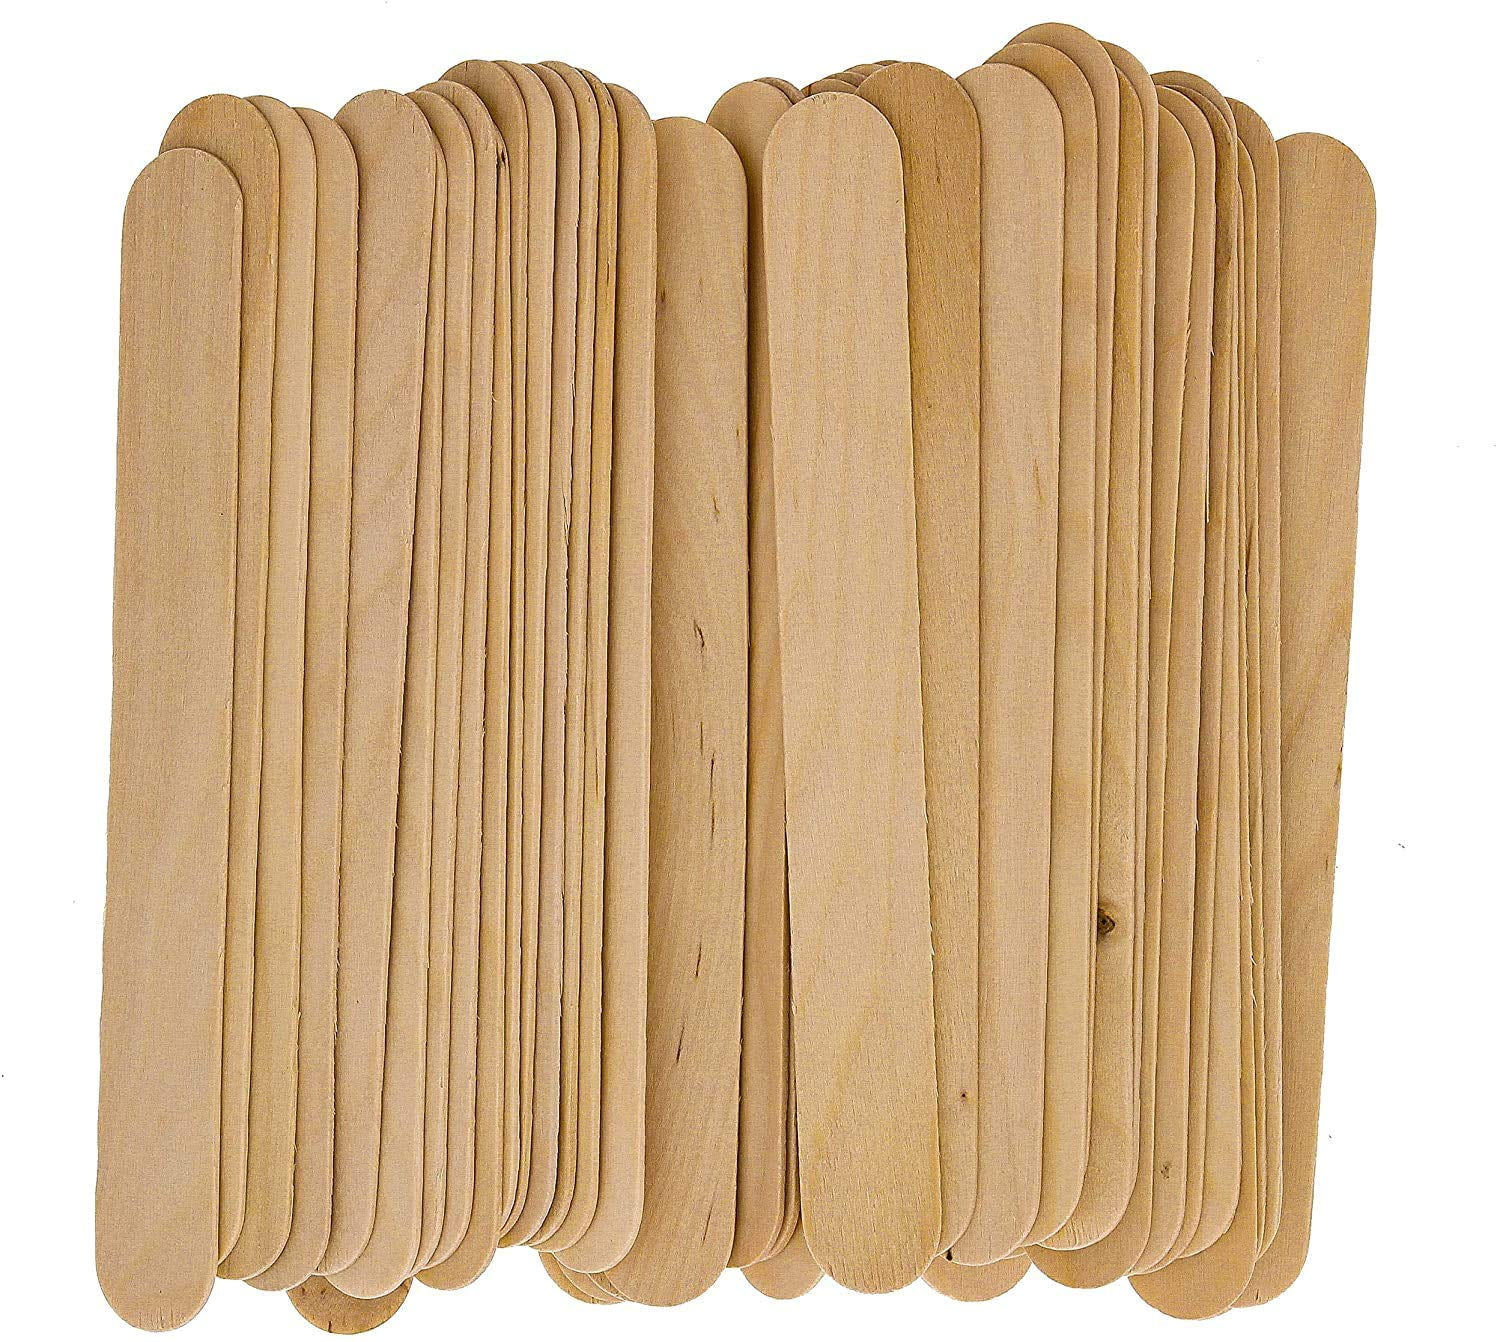 Large Salon Wax Spatulas Waxing Hair Removal Wood Sticks Applicators - 100 Pcs